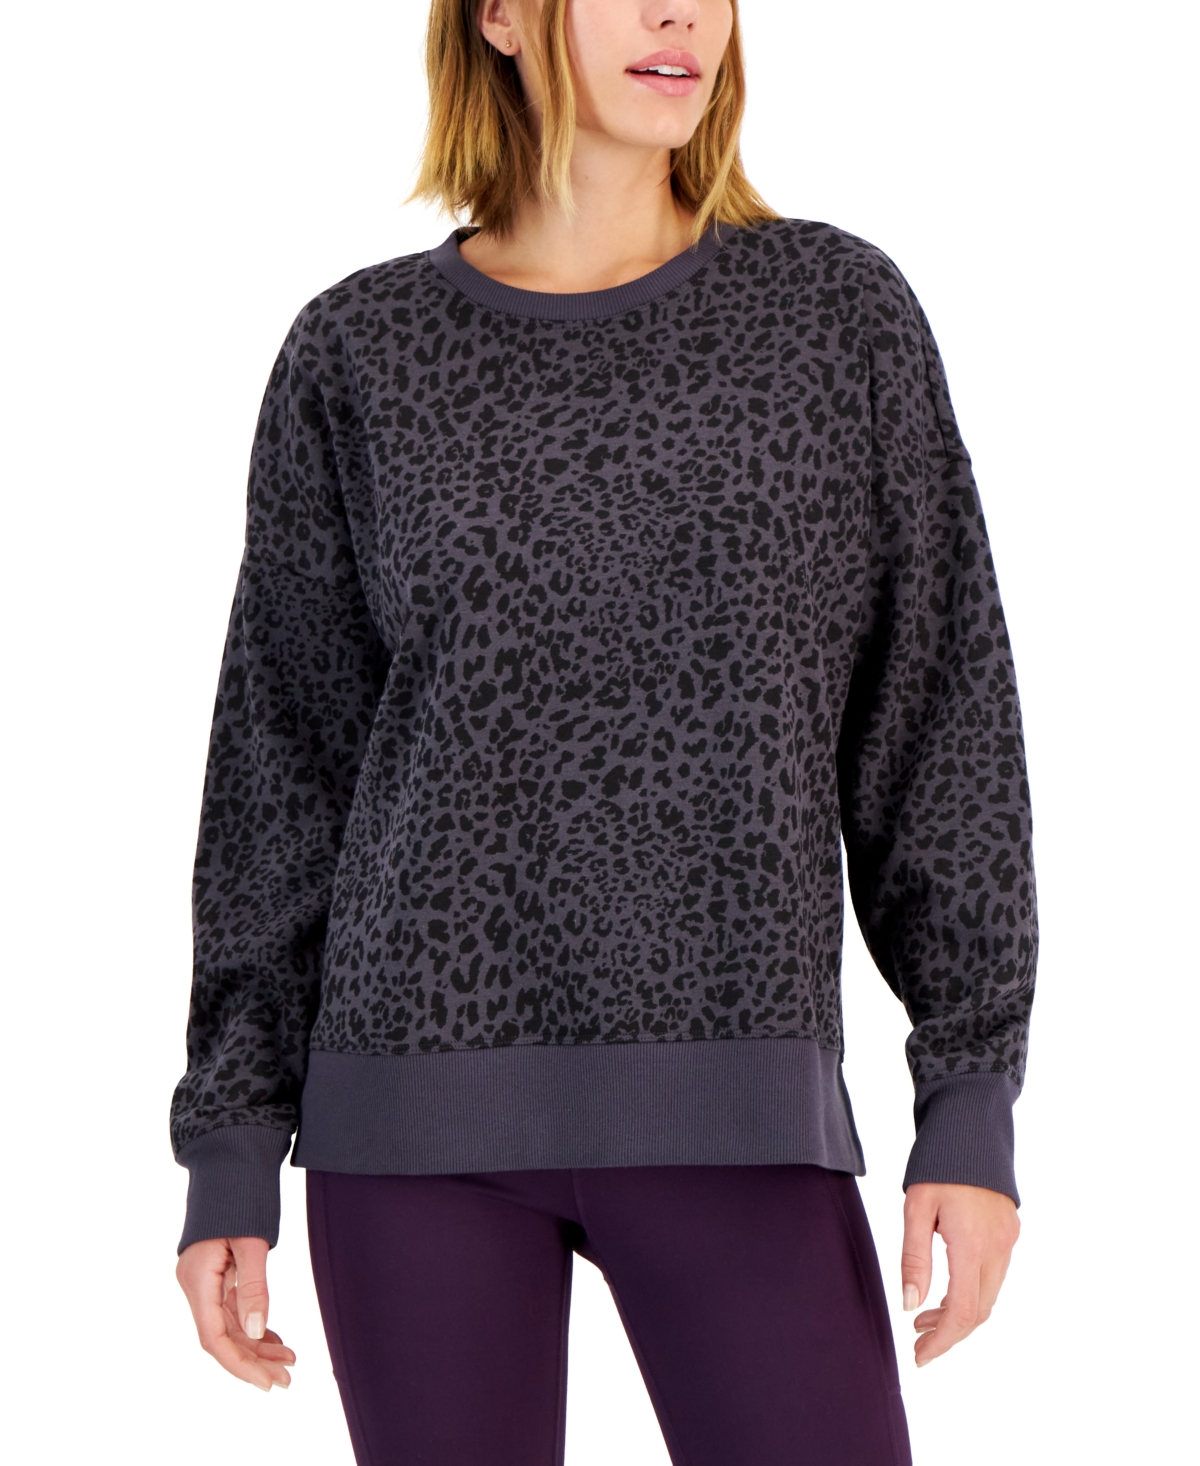  Id Ideology Women's Cheetah-Print Crewneck Sweatshirt, Regular & Petite, Created for Macy's